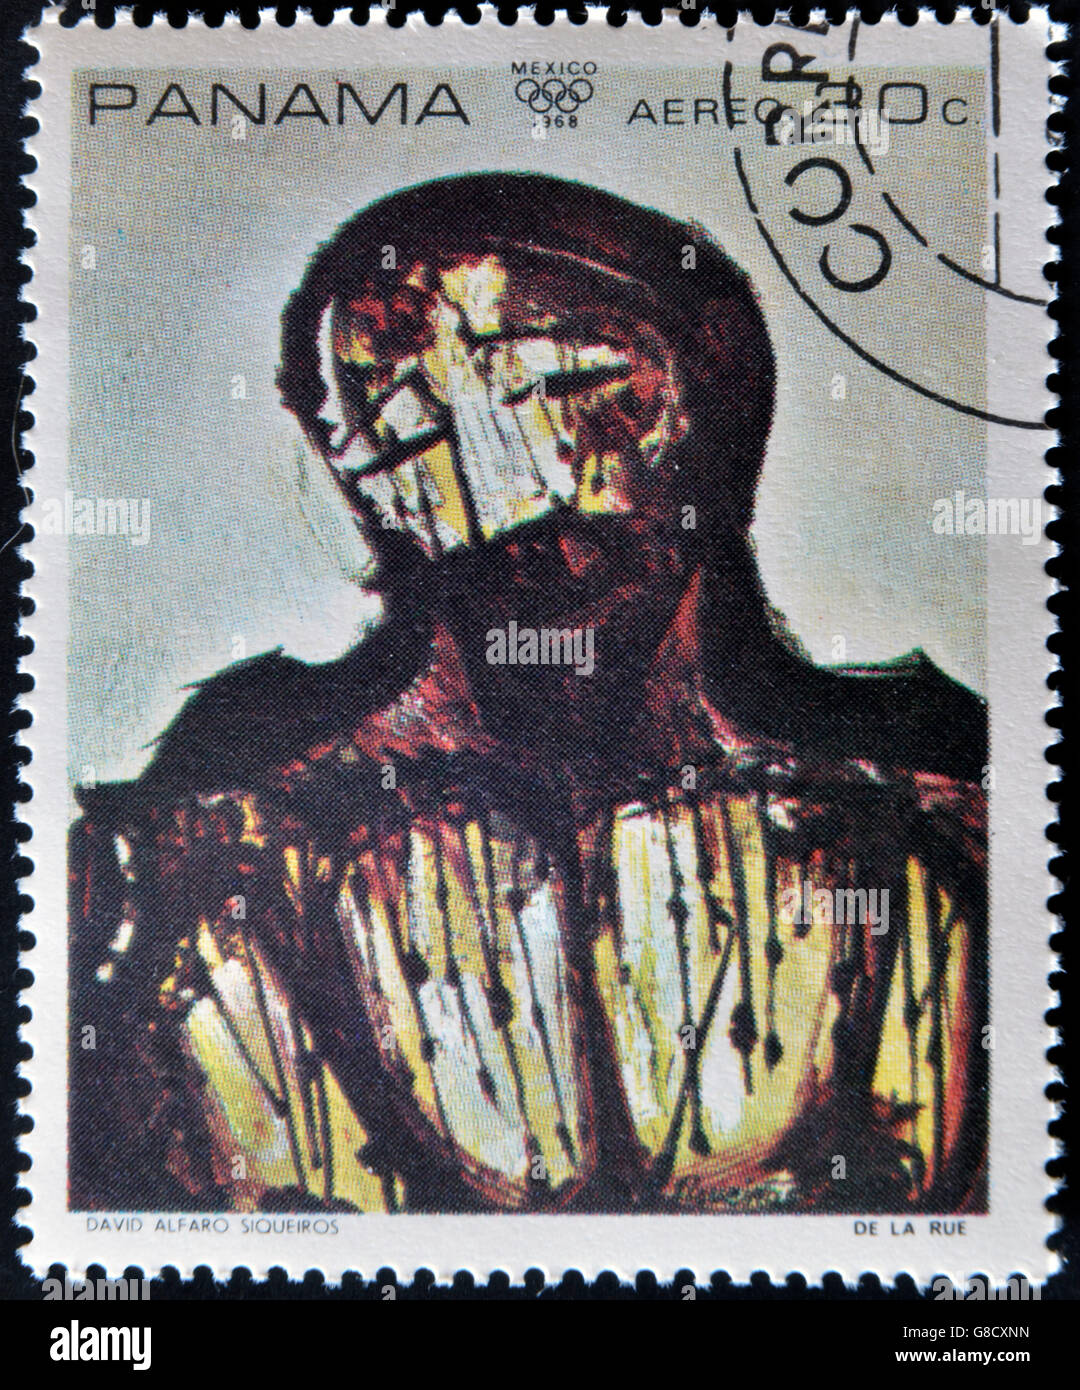 PANAMA - CIRCA 1968: A stamp printed in Panama shows a painting by David Alfaro Siqueiros, circa 1968 Stock Photo